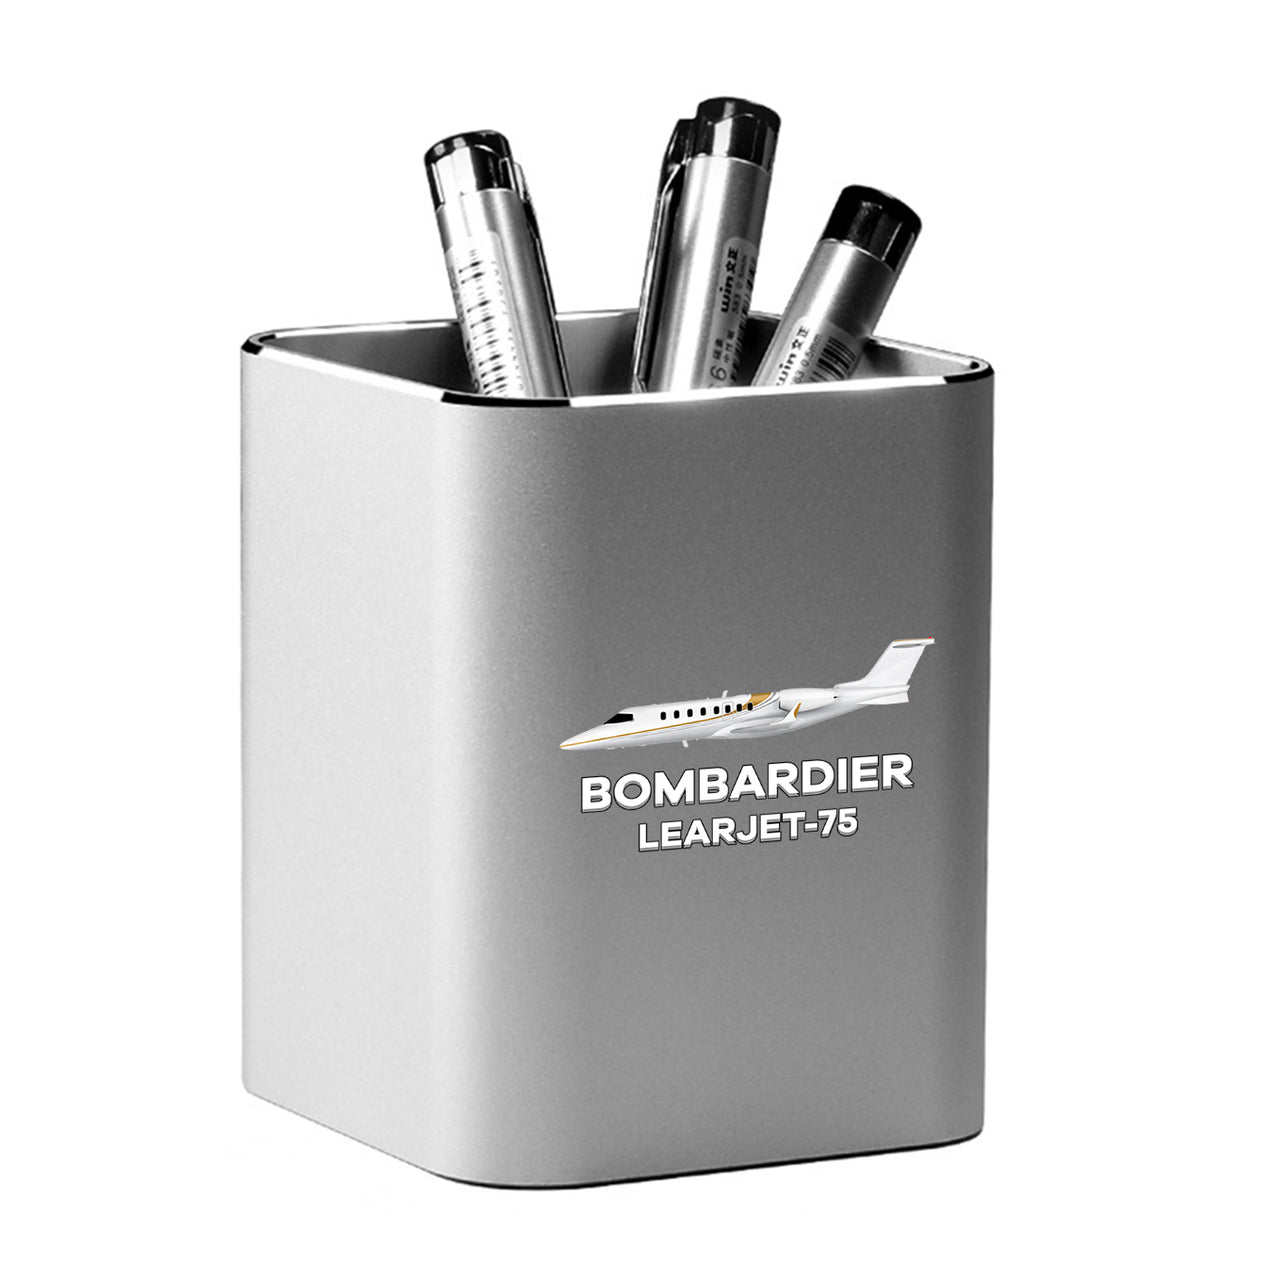 The Bombardier Learjet 75 Designed Aluminium Alloy Pen Holders